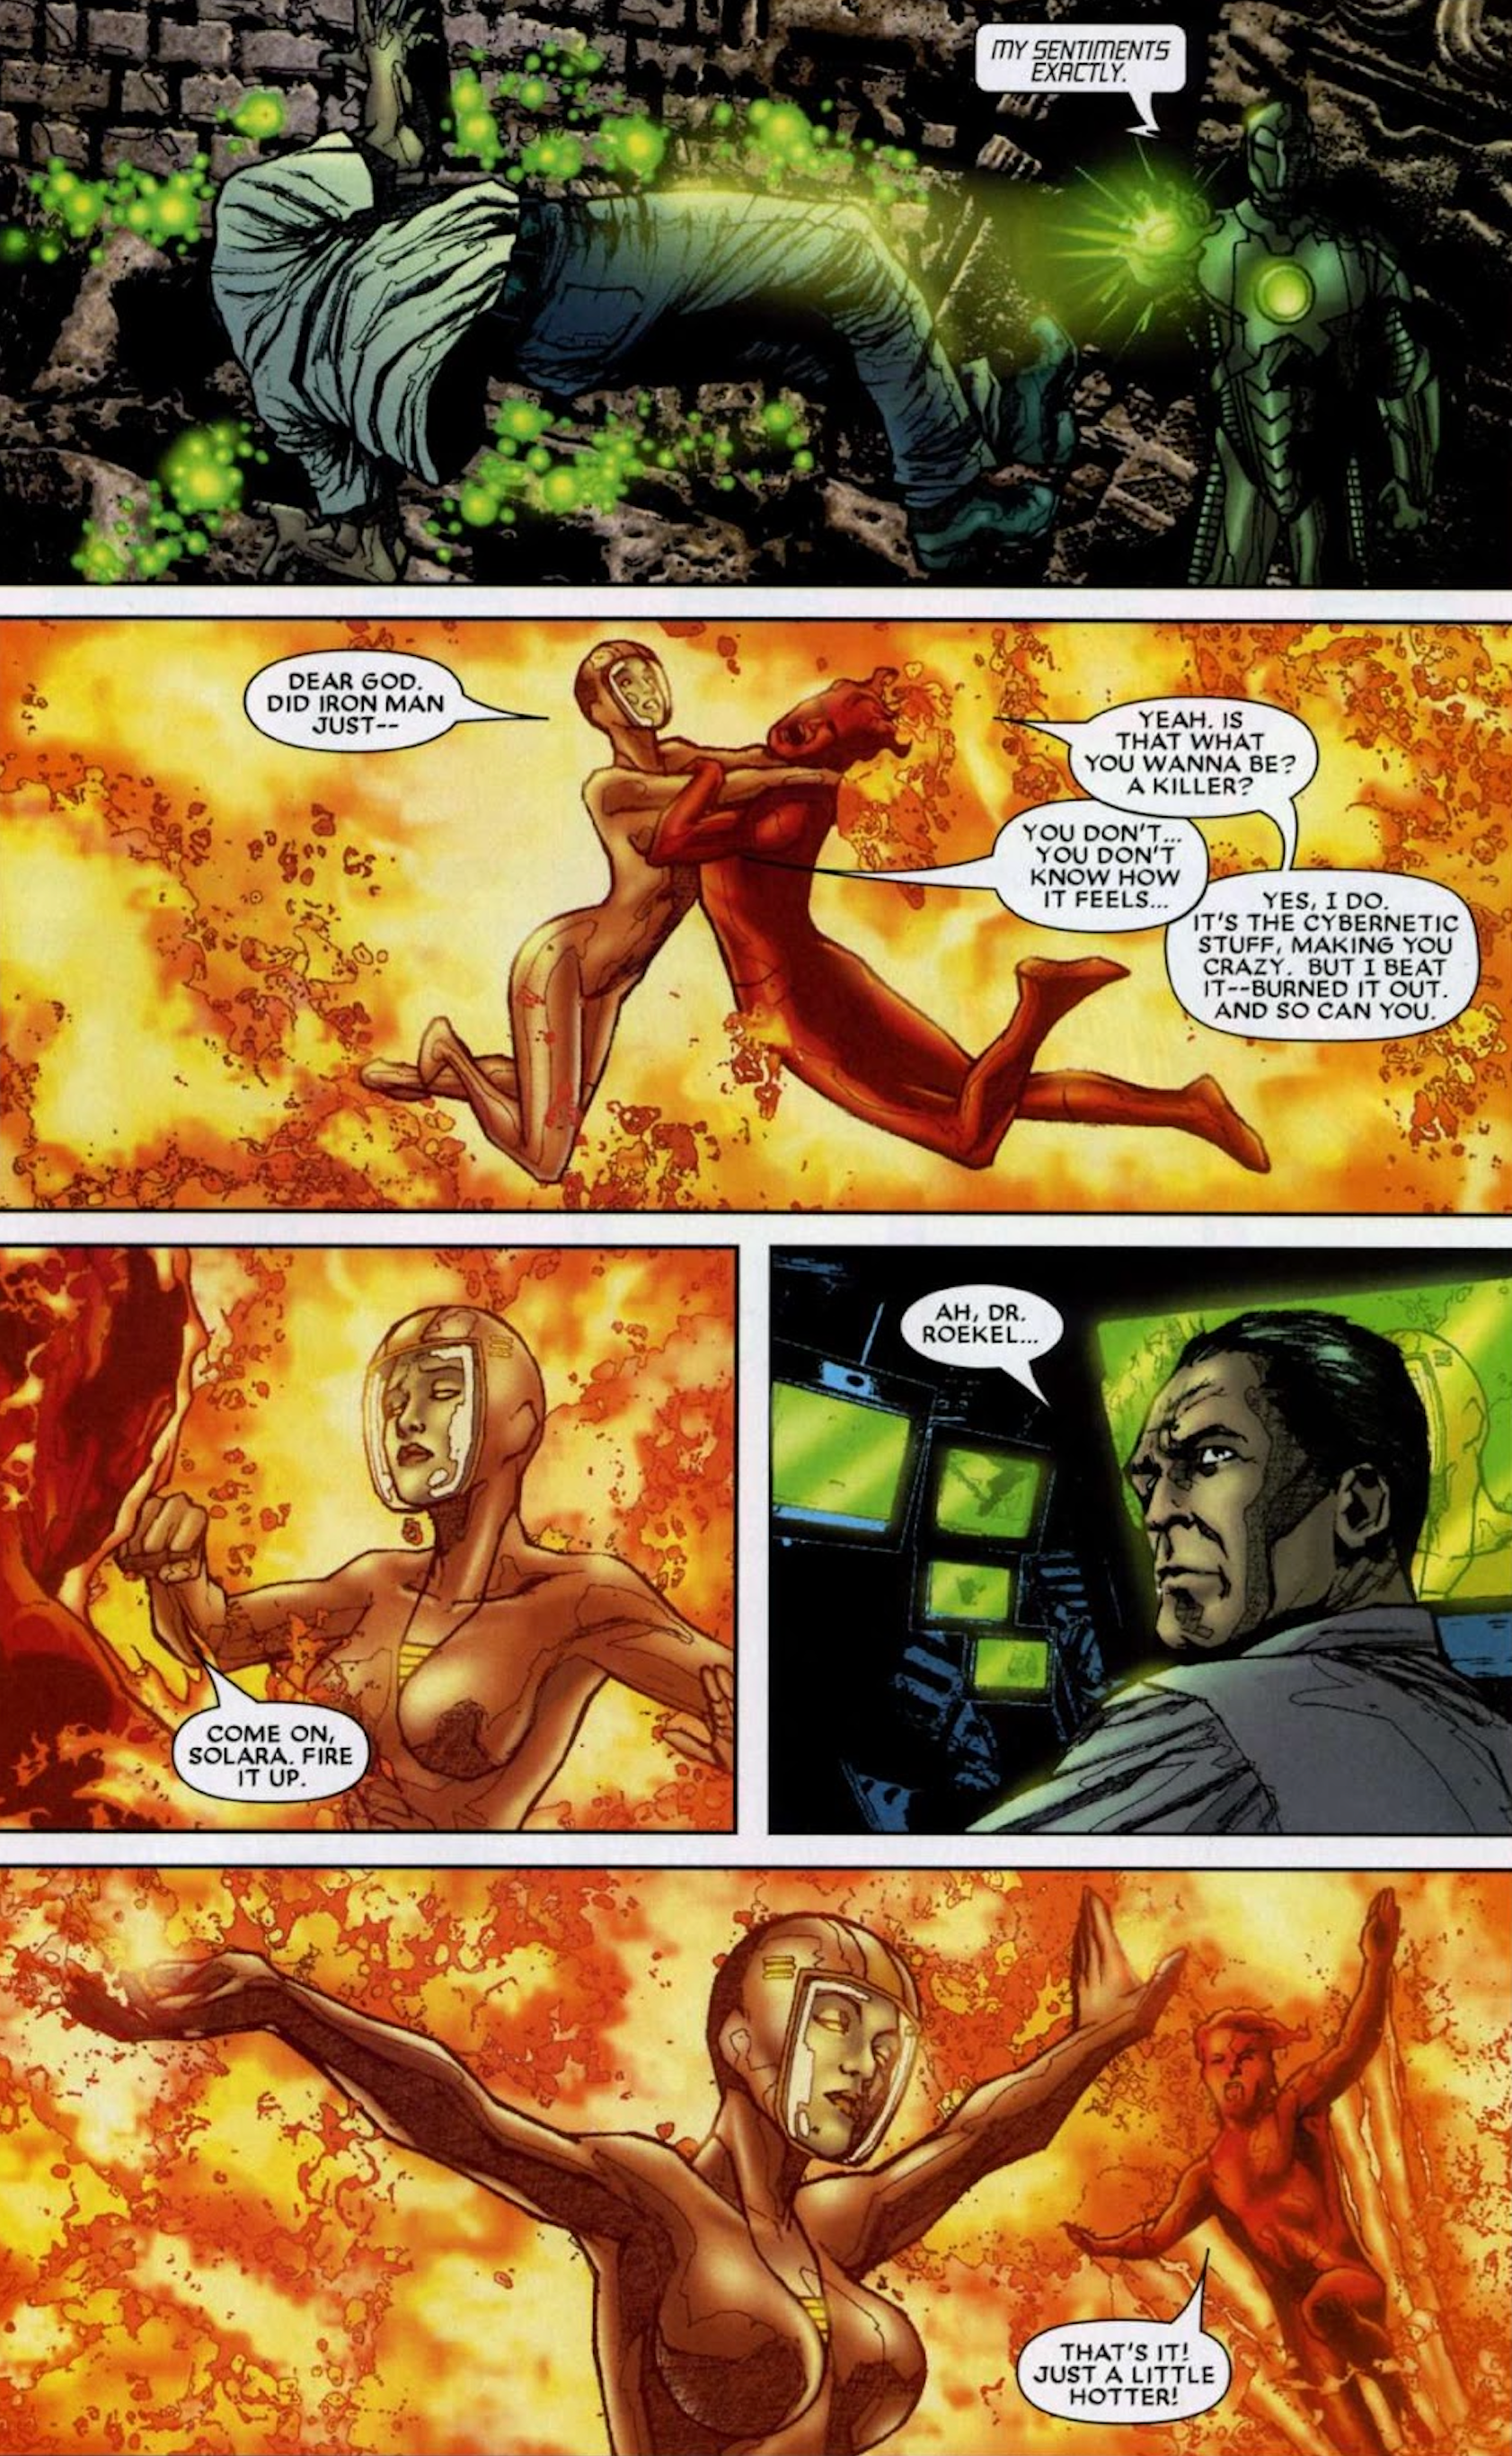 Iron Man attacks Wolverine